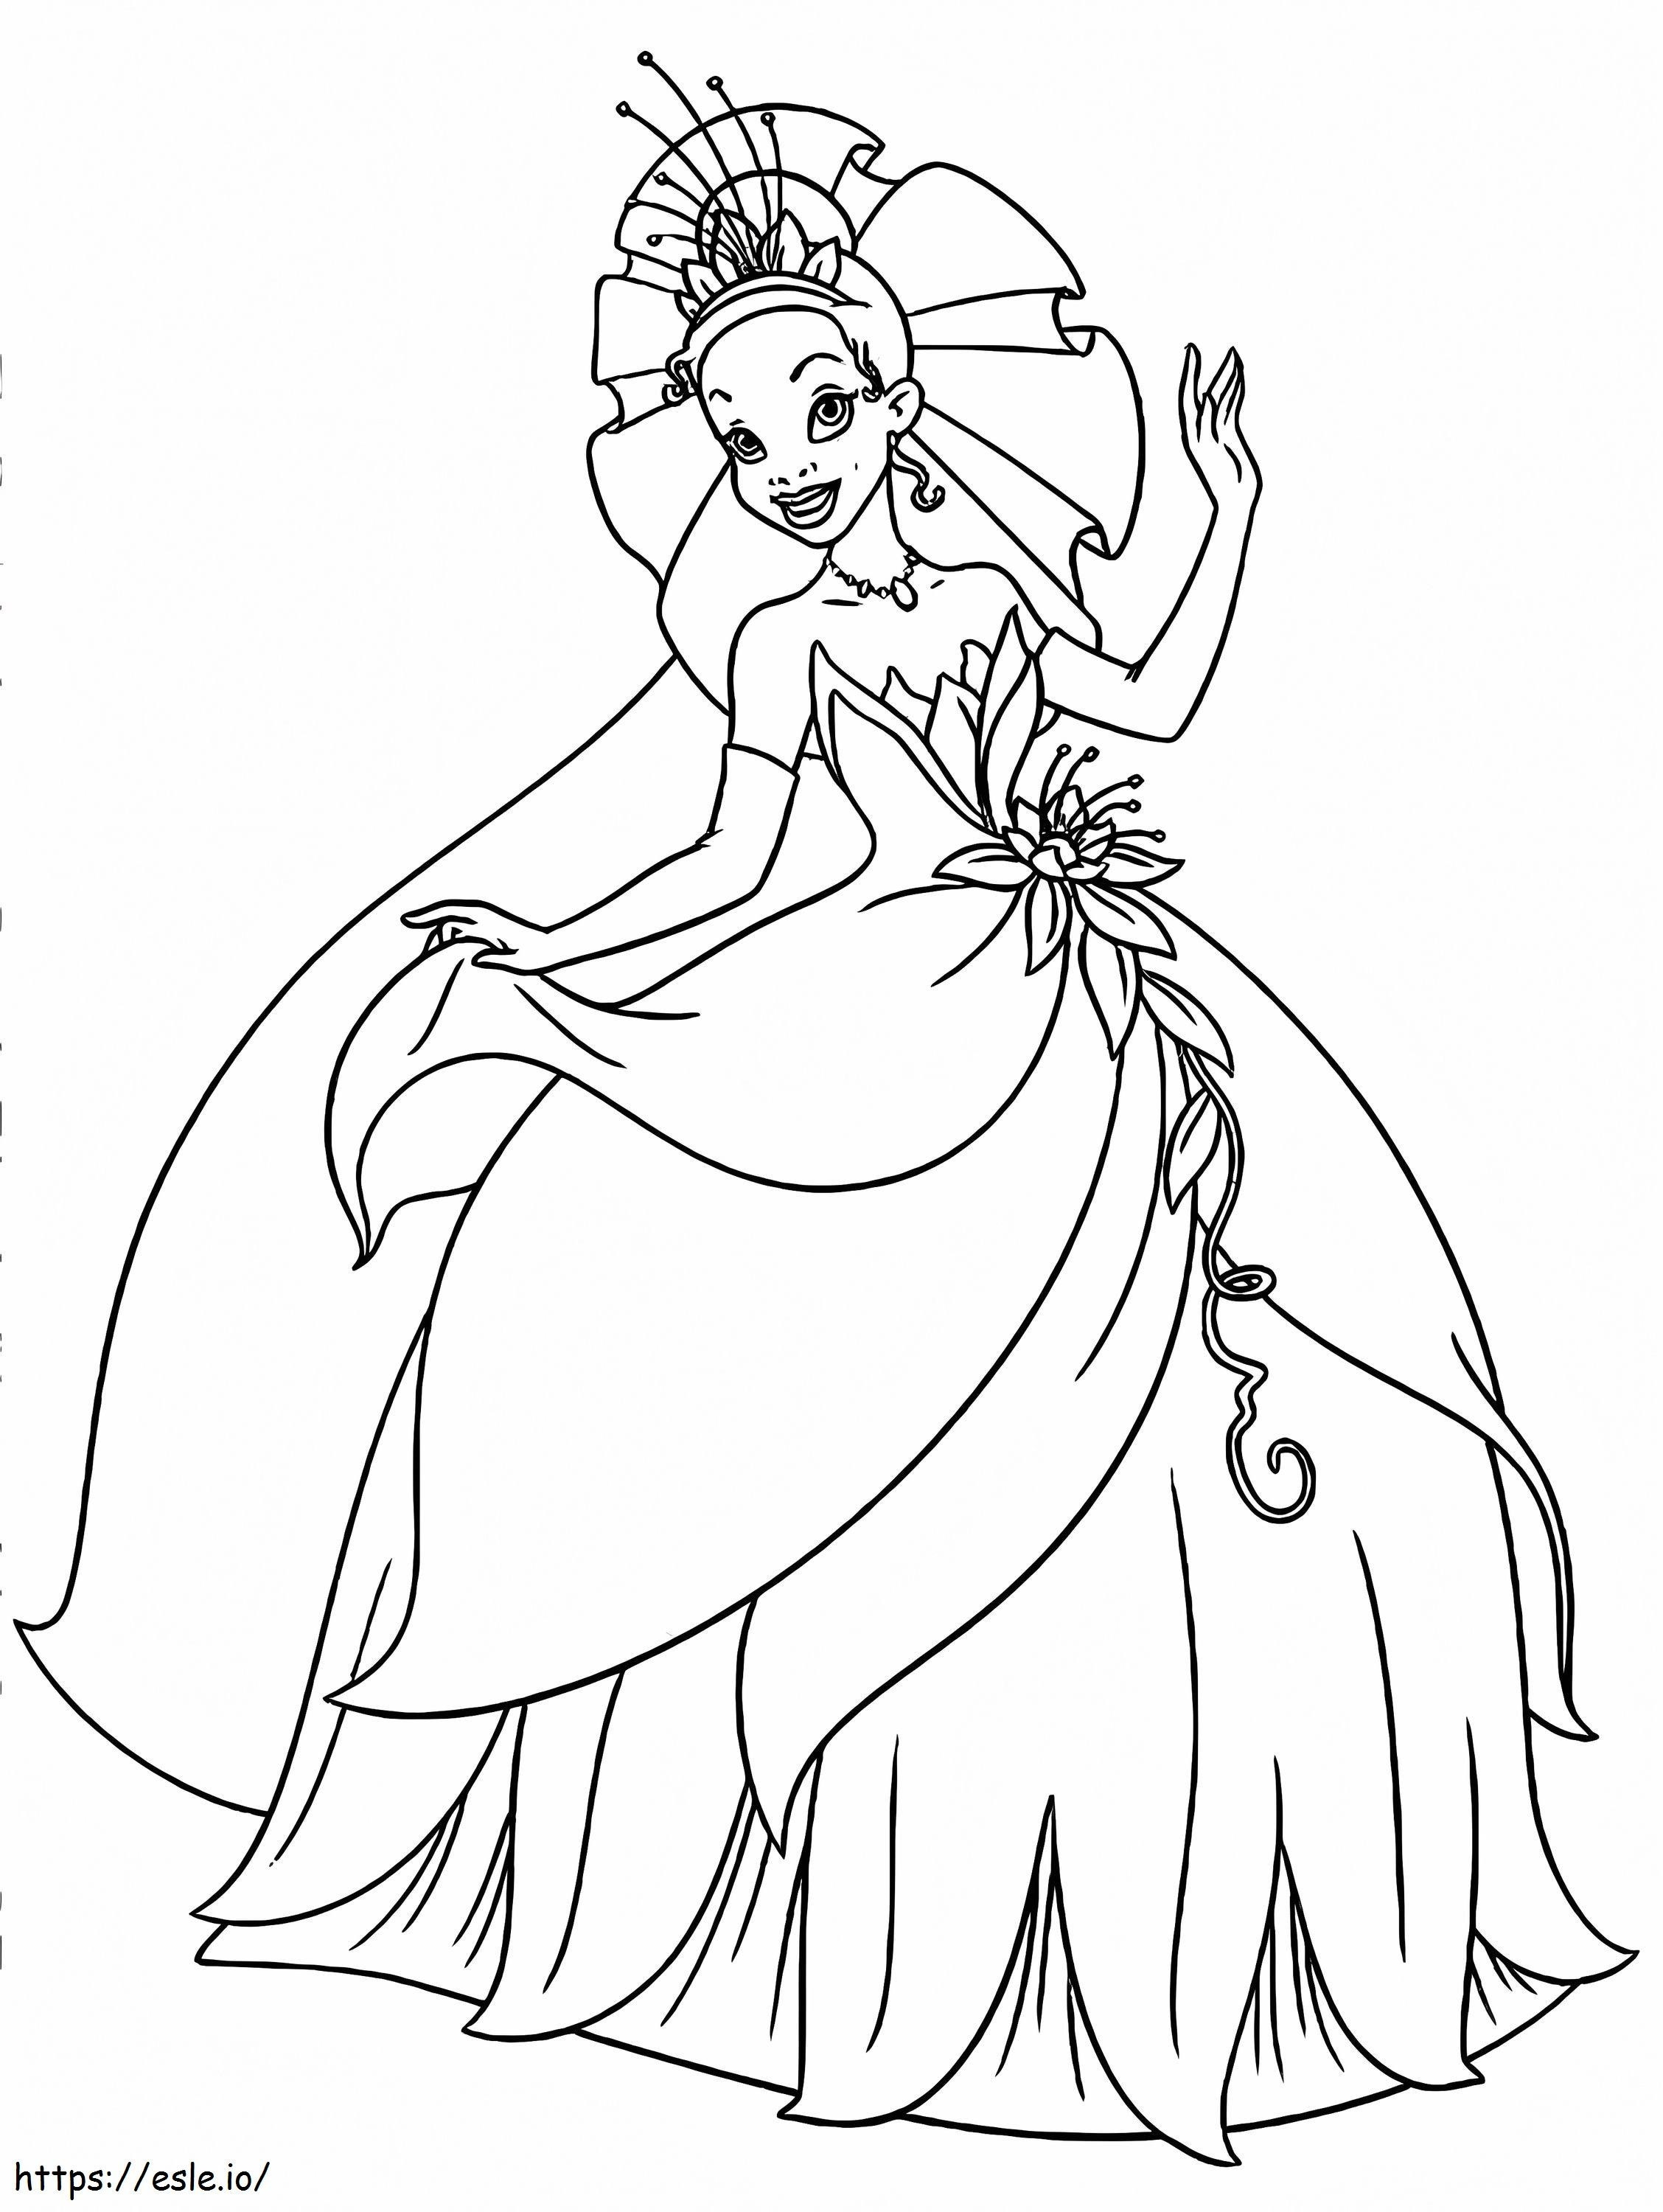 Charming Princess Tiana coloring page